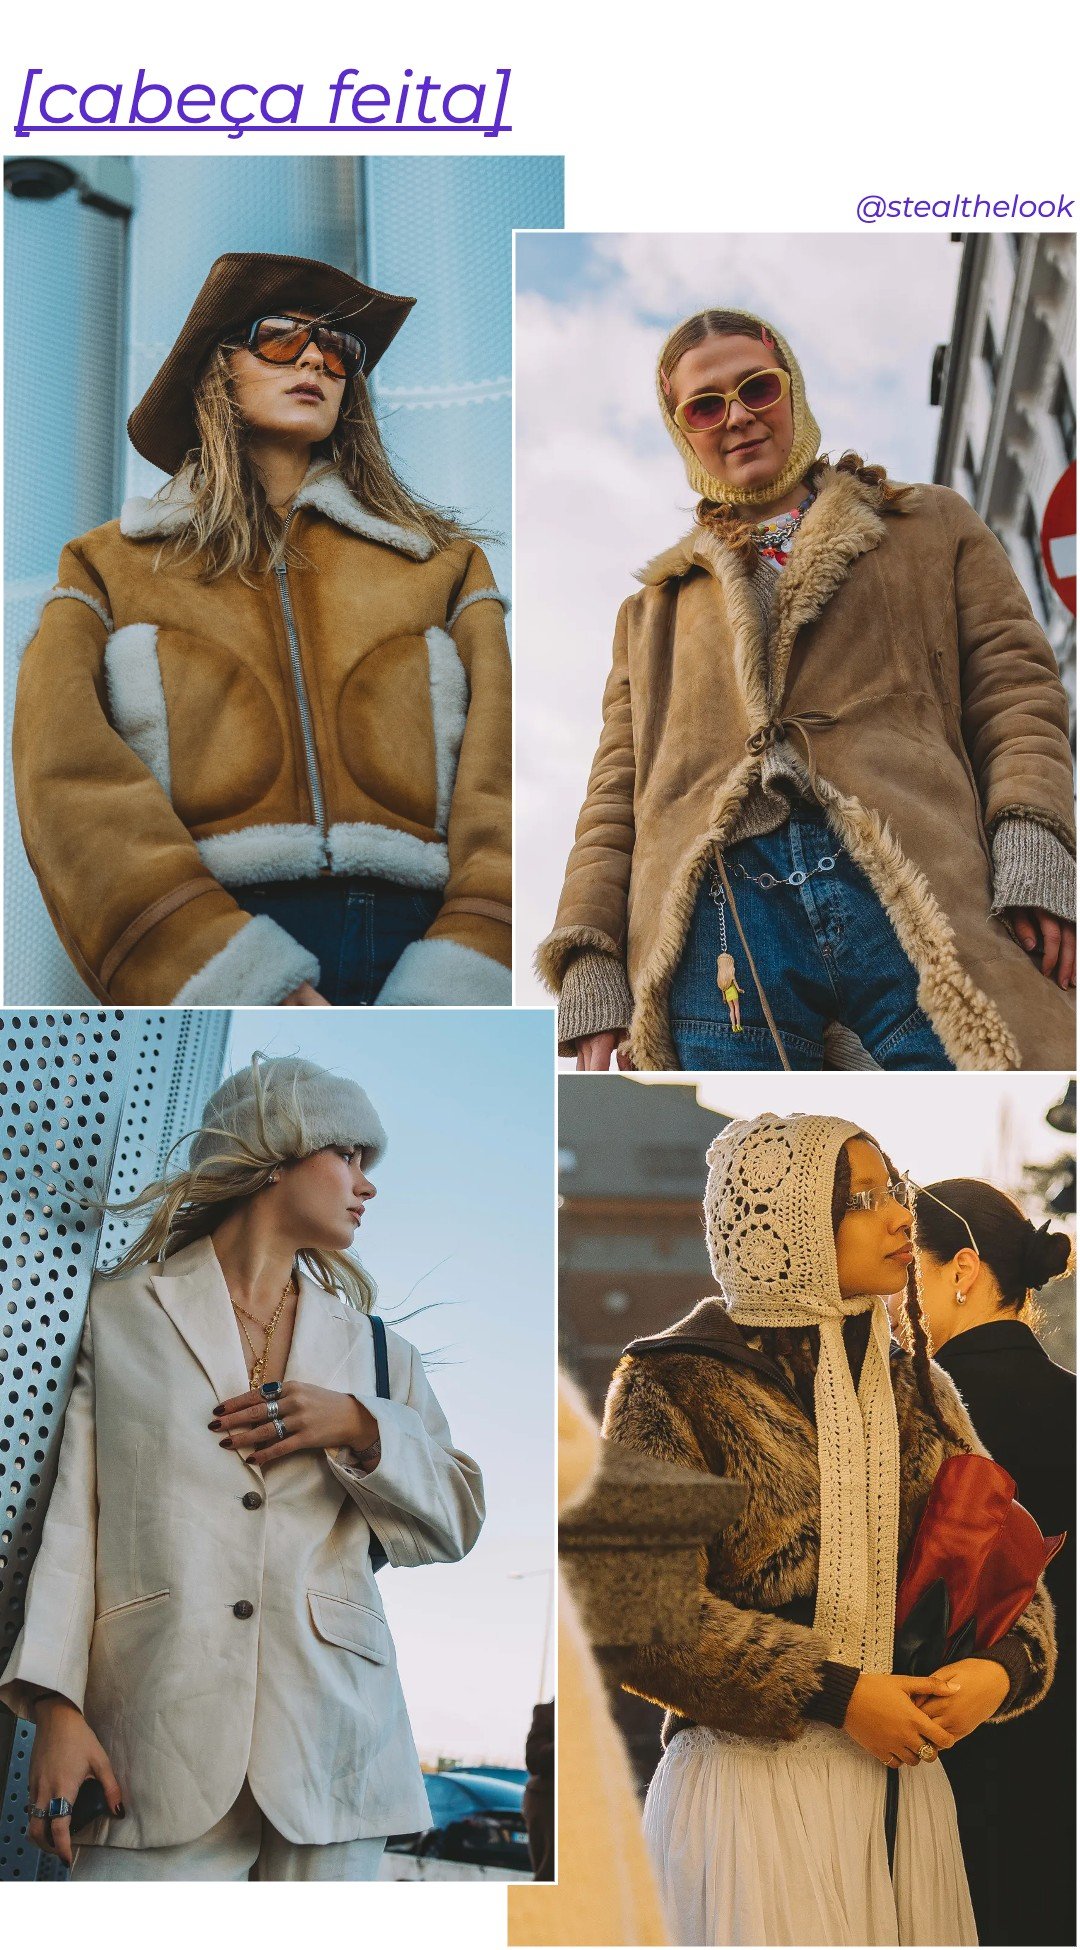 Cabeça feita - Tendências do street style - Tendências do street style - Inverno - Copenhagen Fashion Week - https://stealthelook.com.br